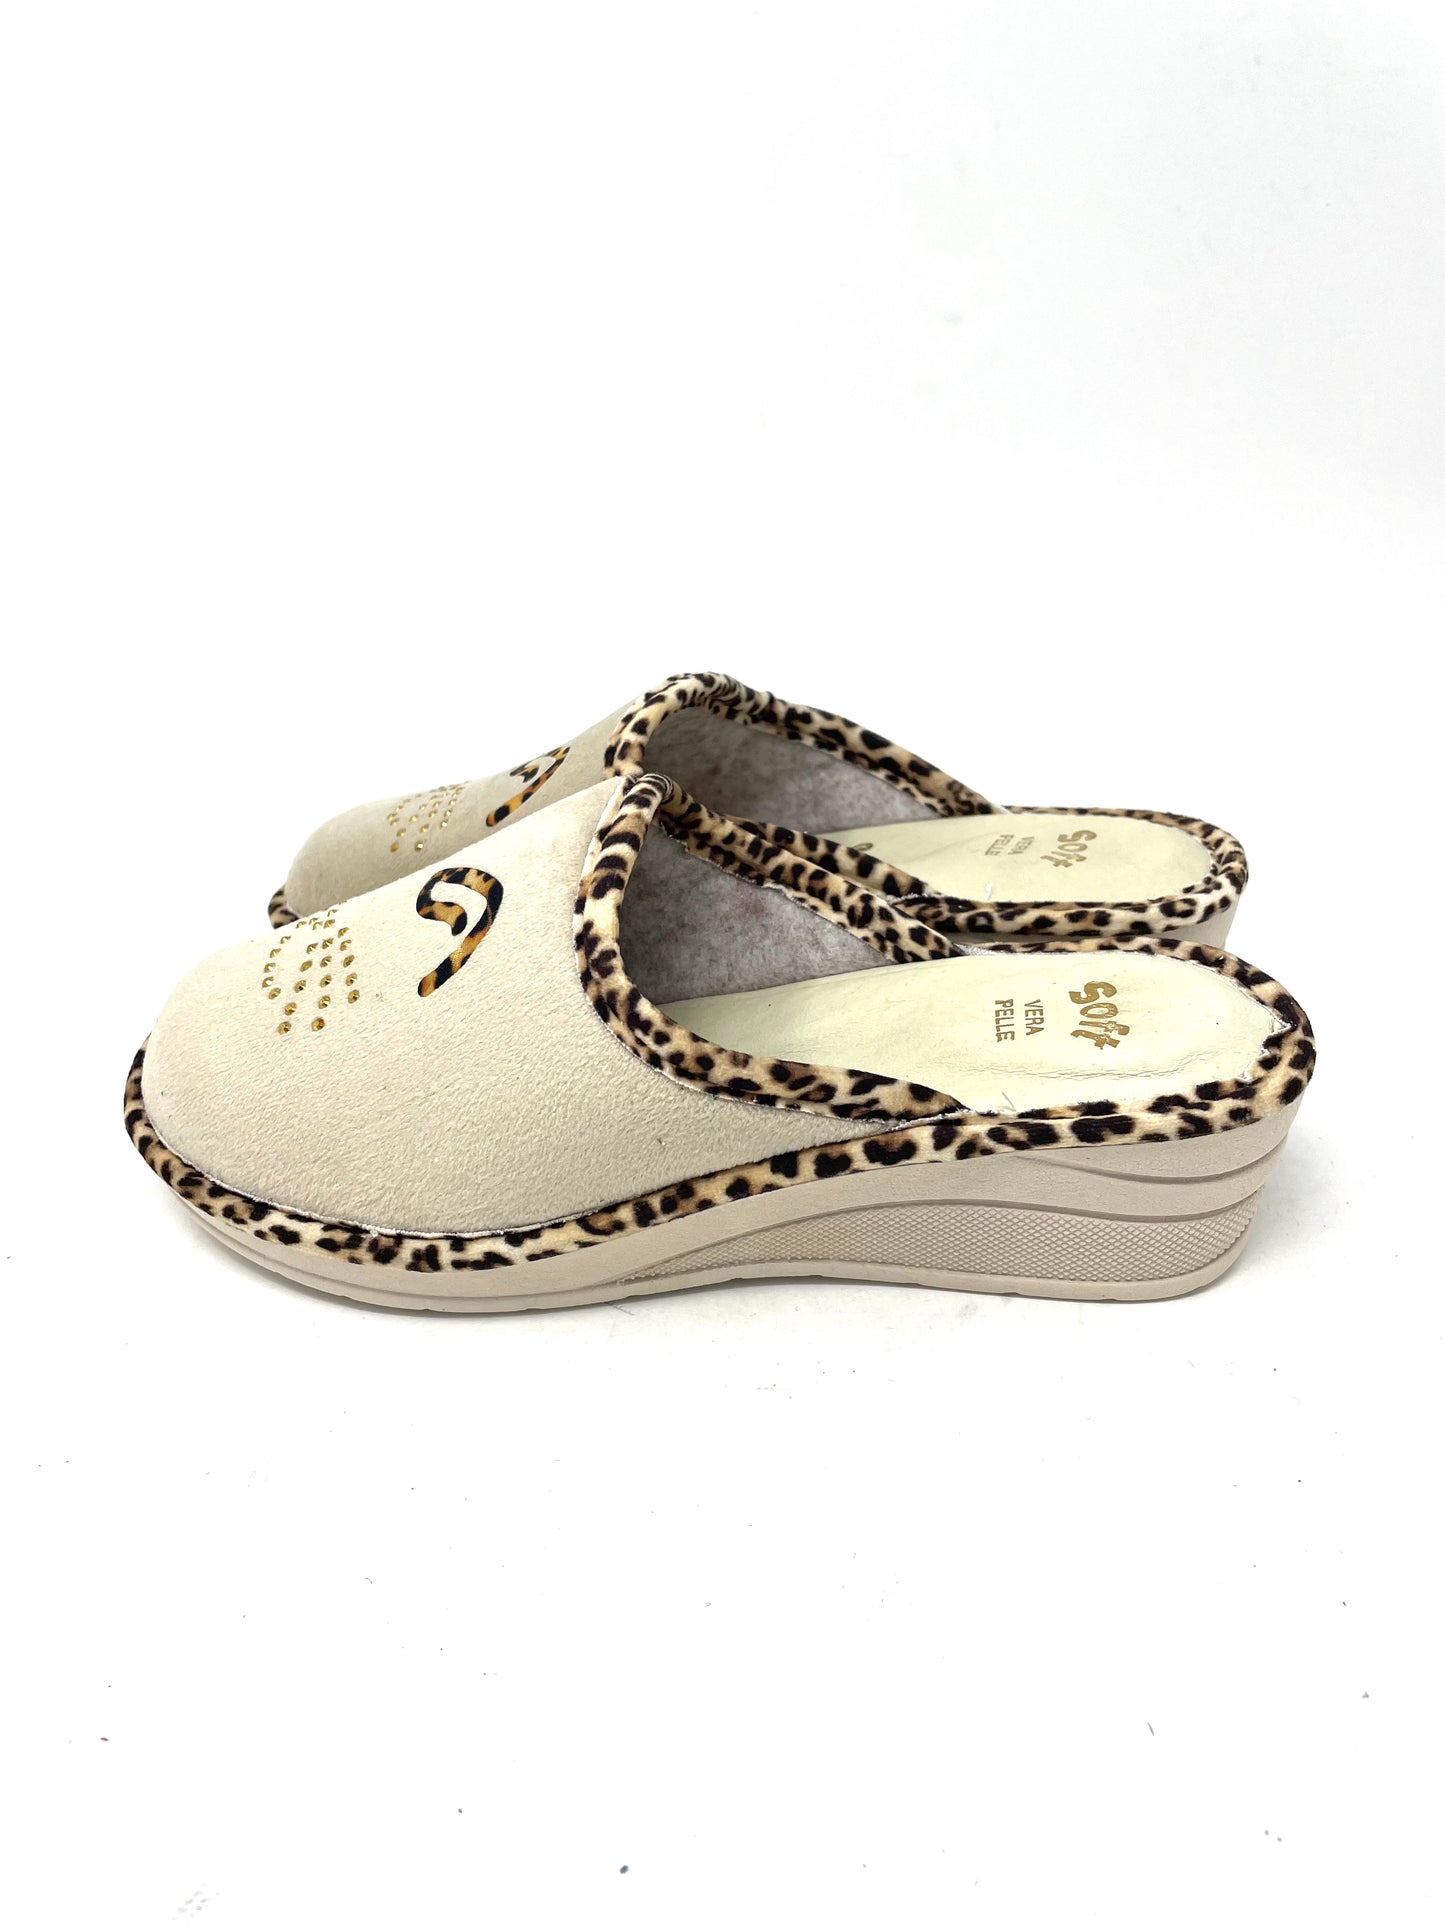 Pantofola profilo leopardo velluto beige -PD522BE